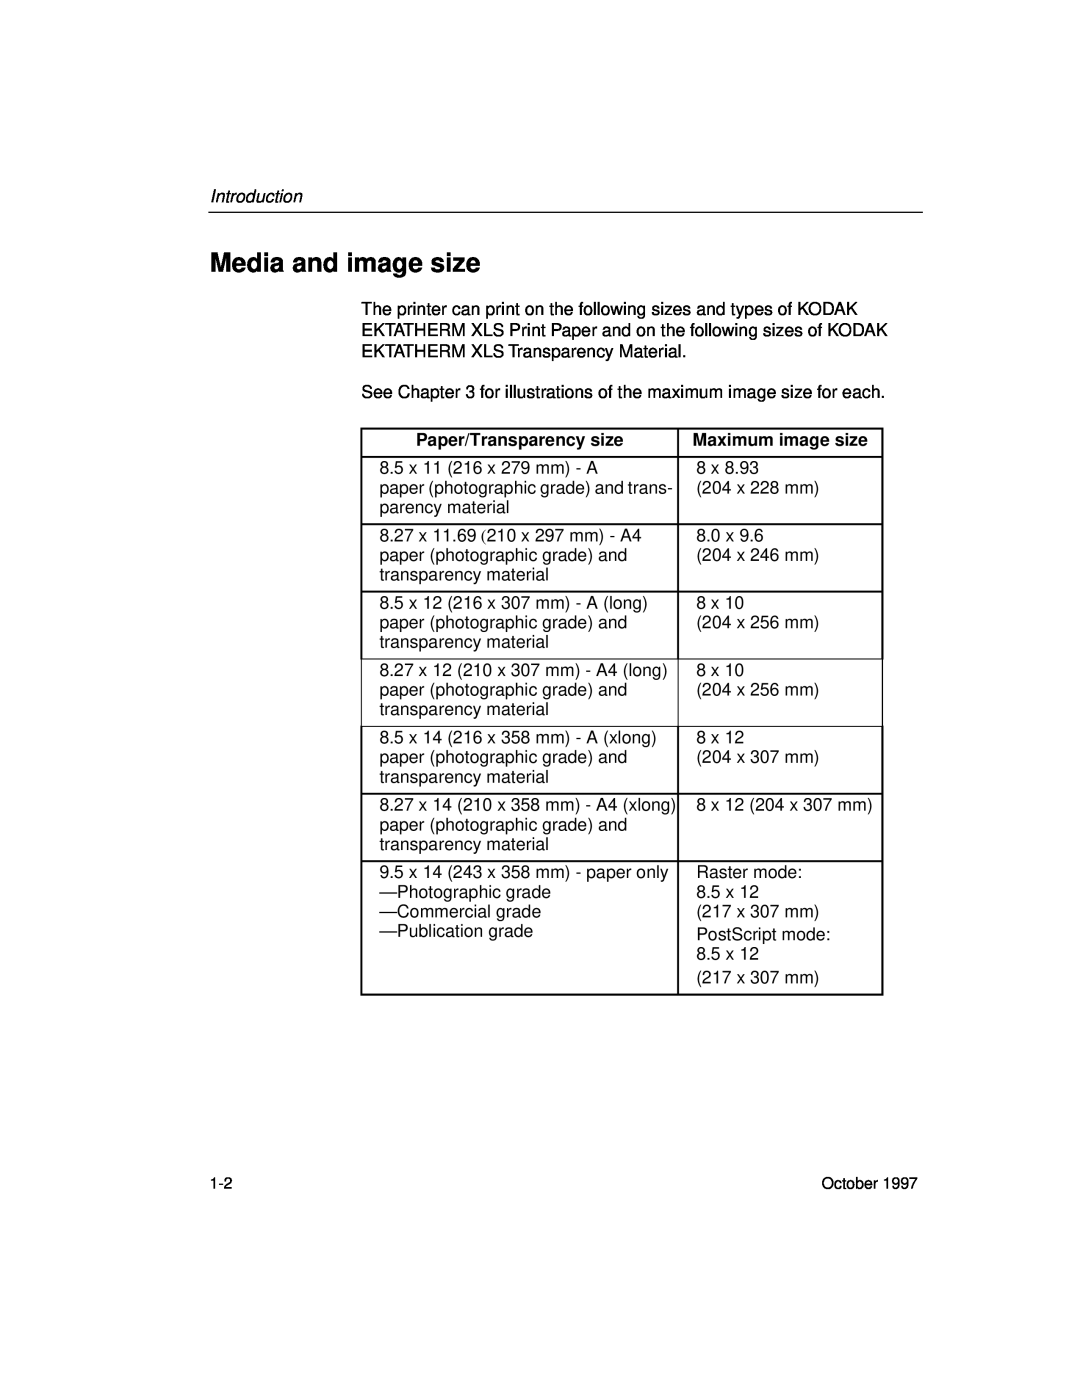 Kodak 8650 manual Media and image size, Introduction, Paper/Transparency size, Maximum image size 